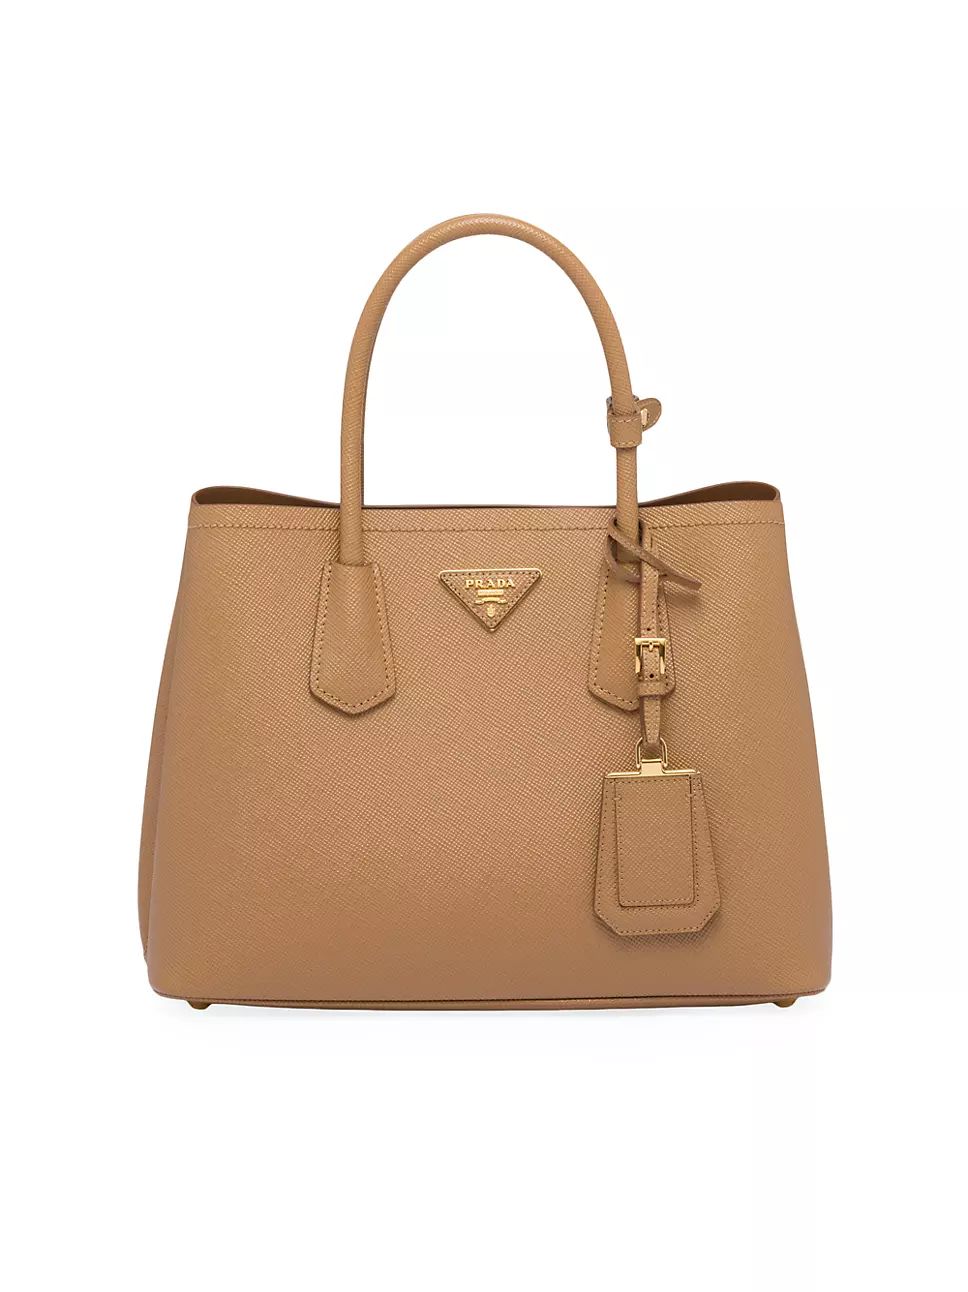 Prada Small Saffiano Leather Double Bag | Saks Fifth Avenue